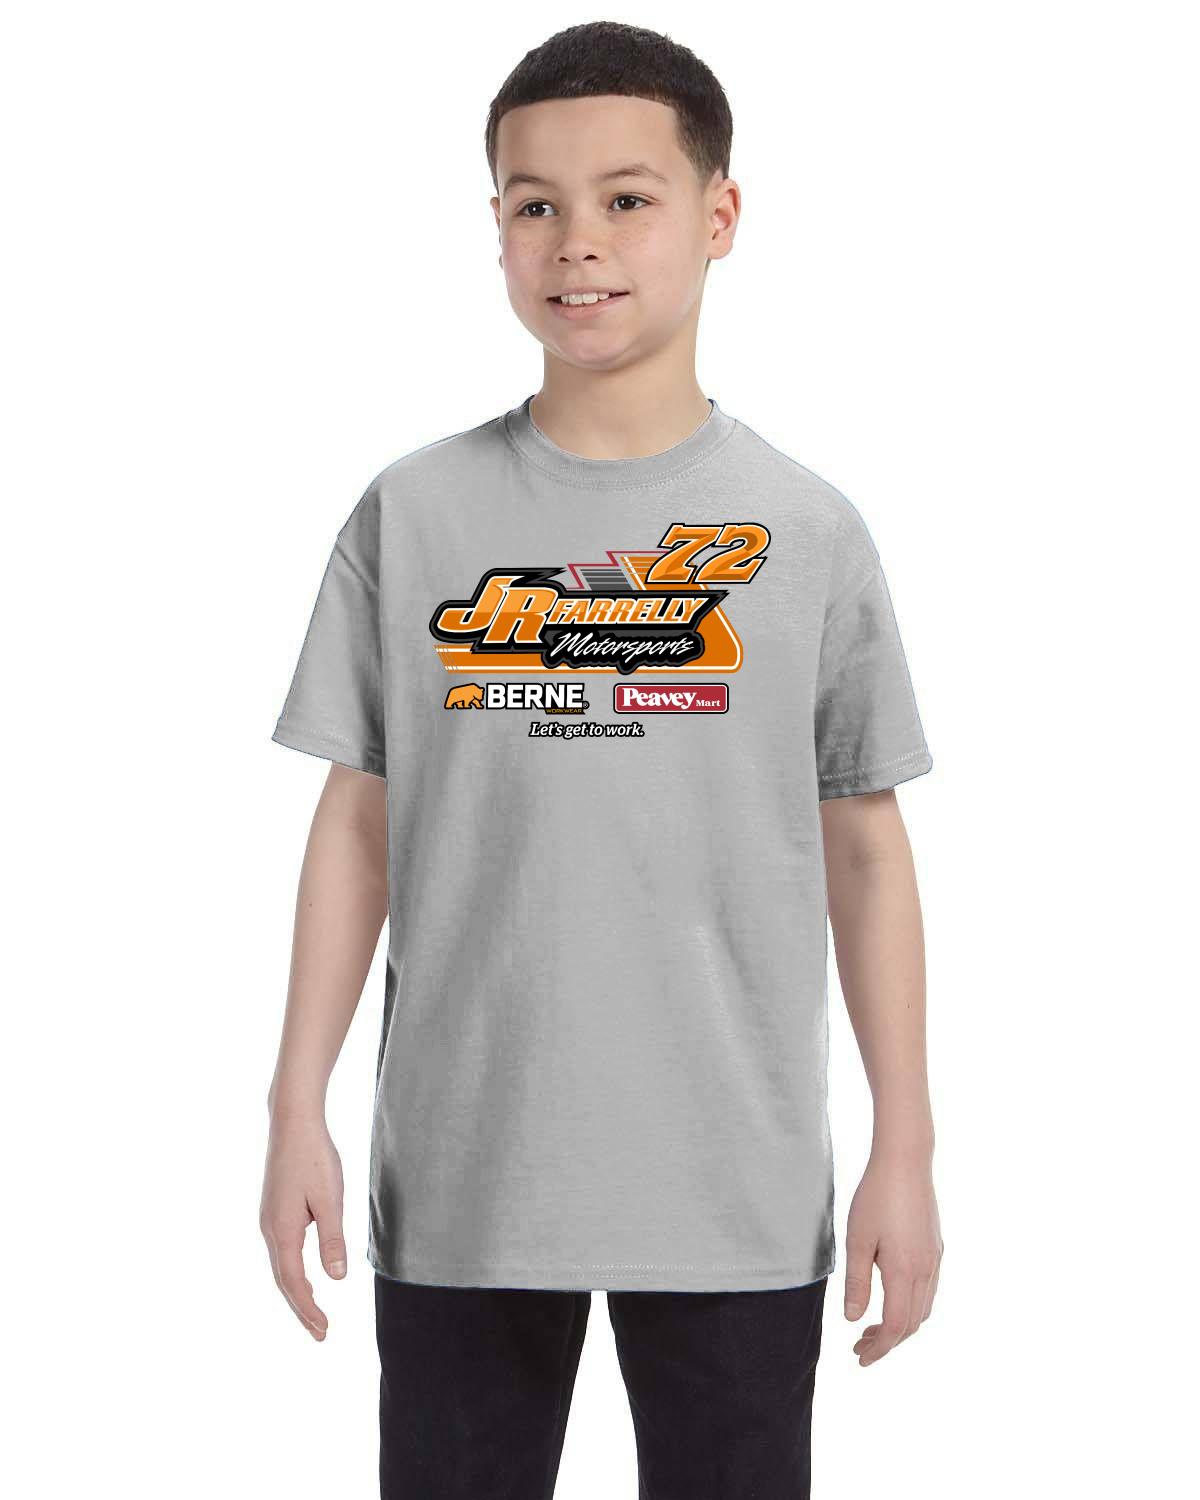 Jr. Farrelly Motorsports / BERNE-Peavey Racing Youth T-shirt